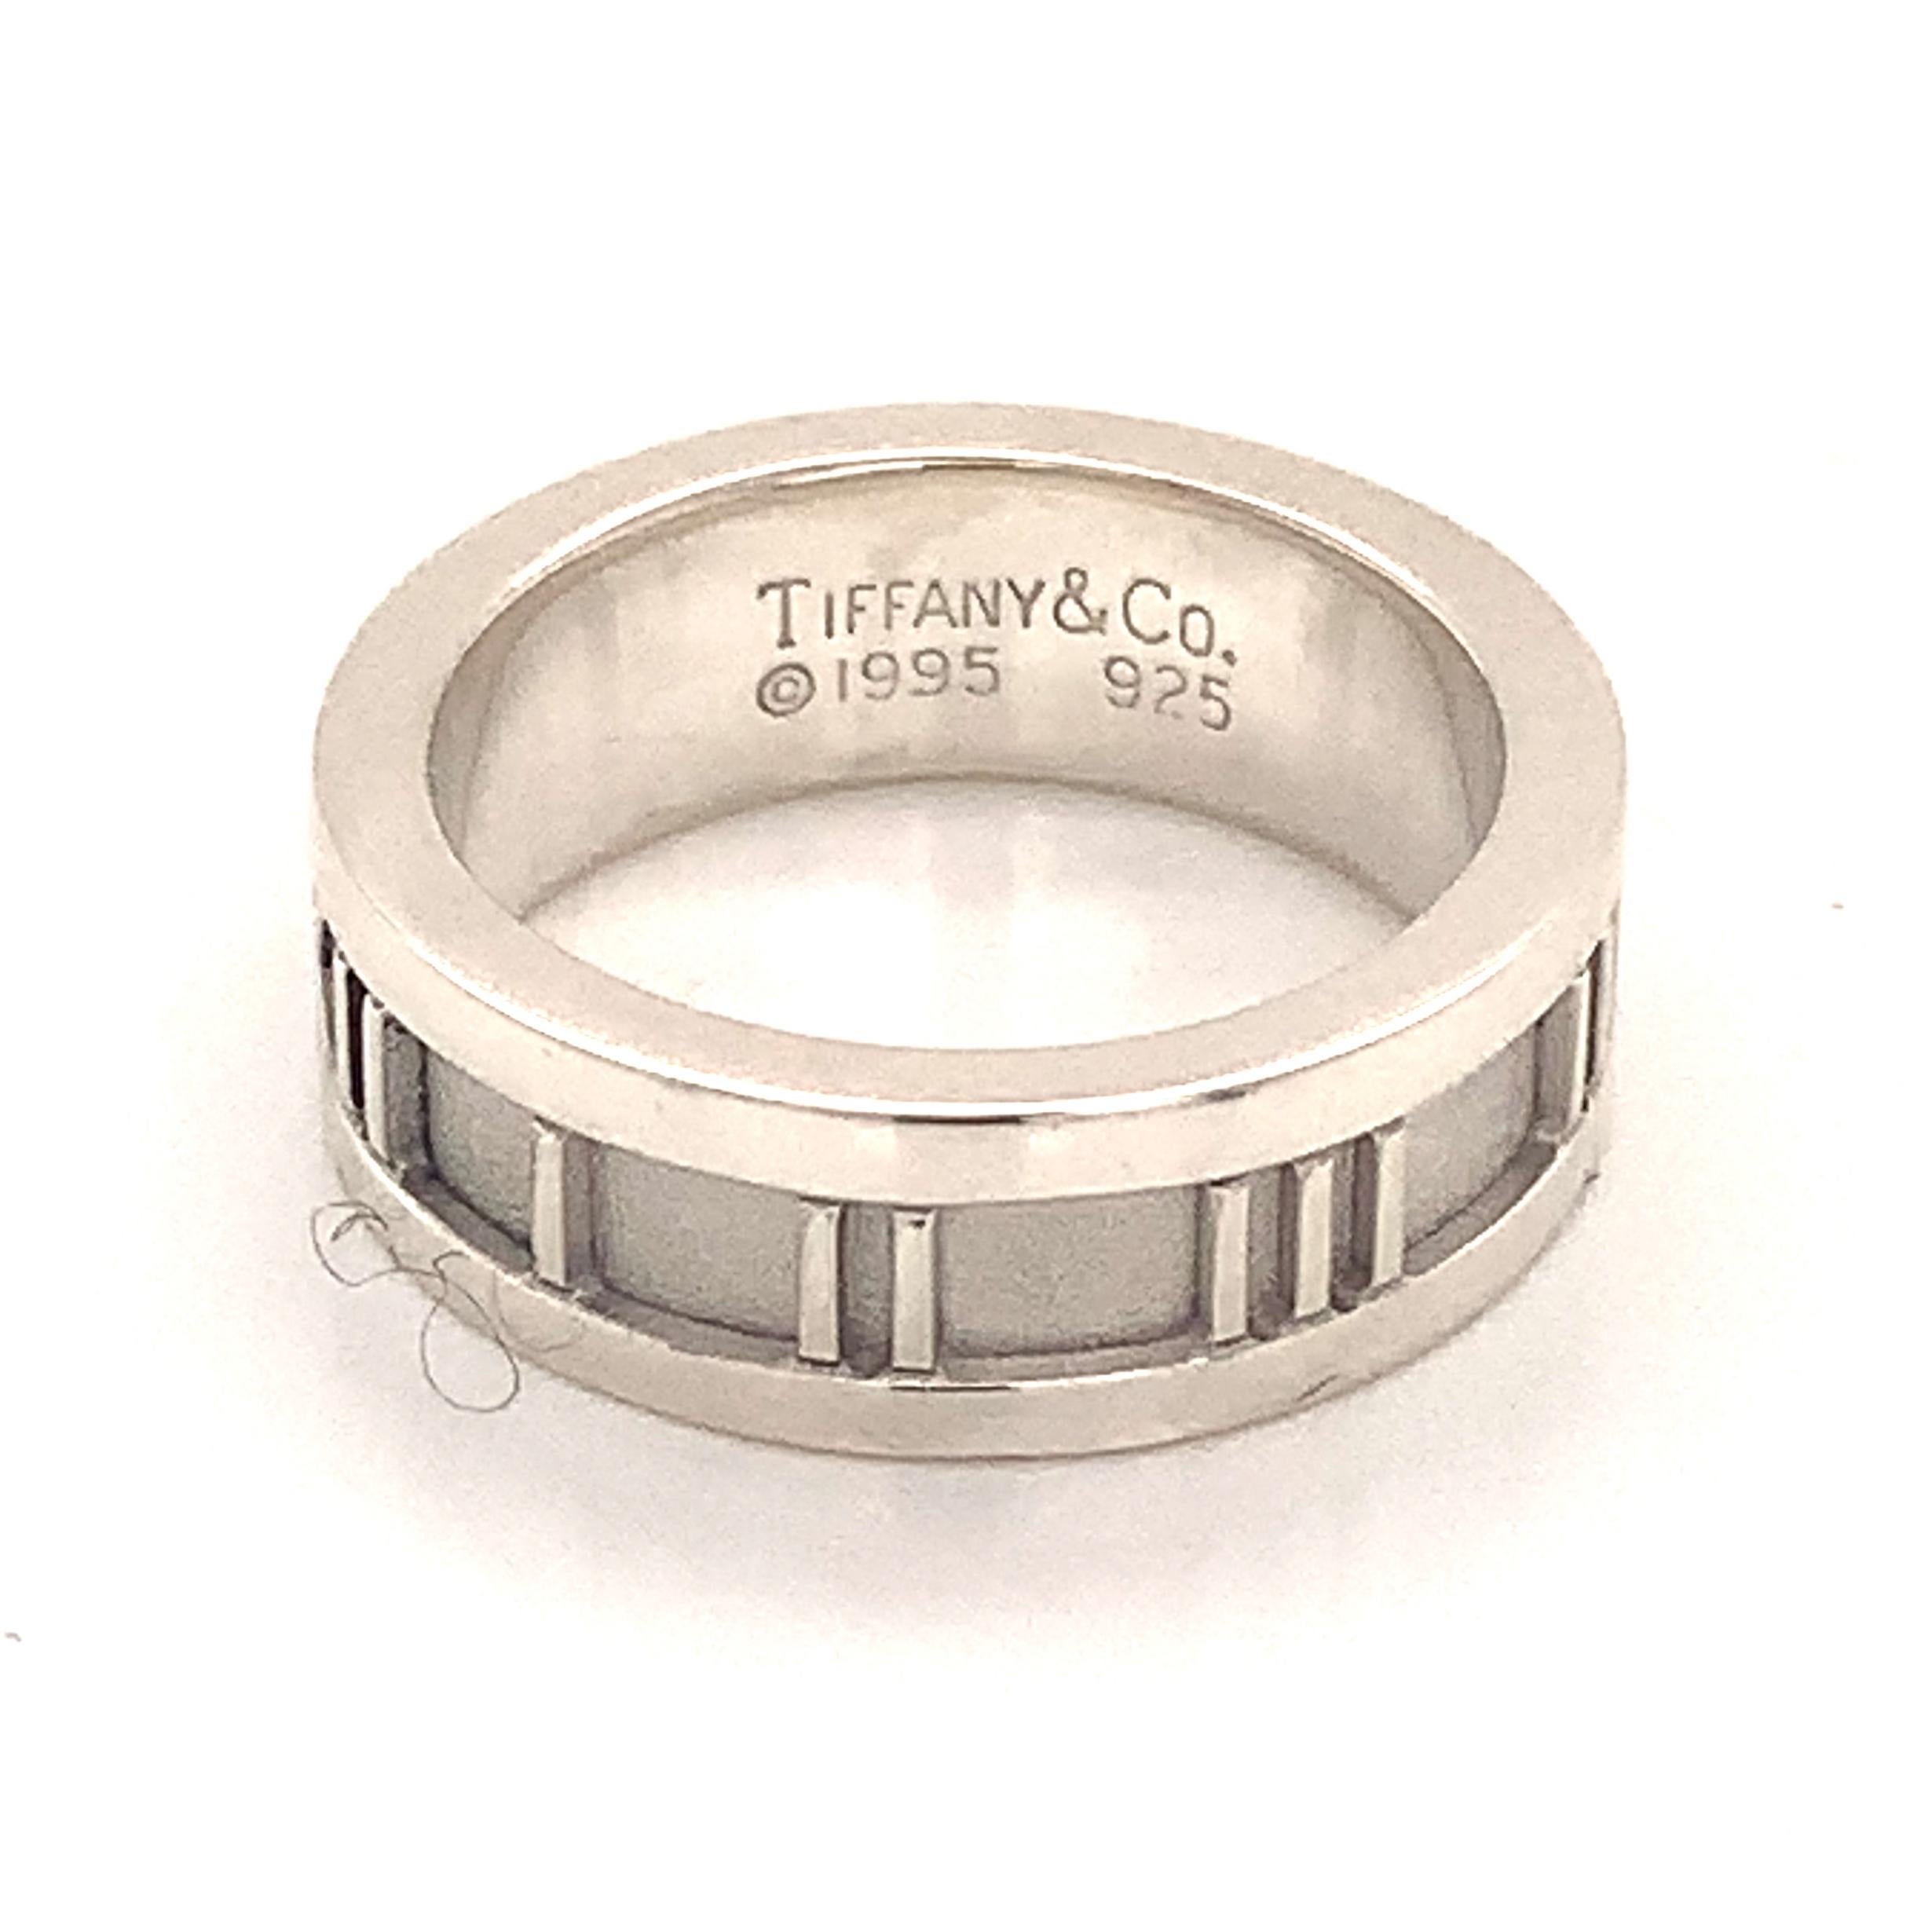 Tiffany & Co Estate Sterling Silver Ring, 5.63 Grams 1